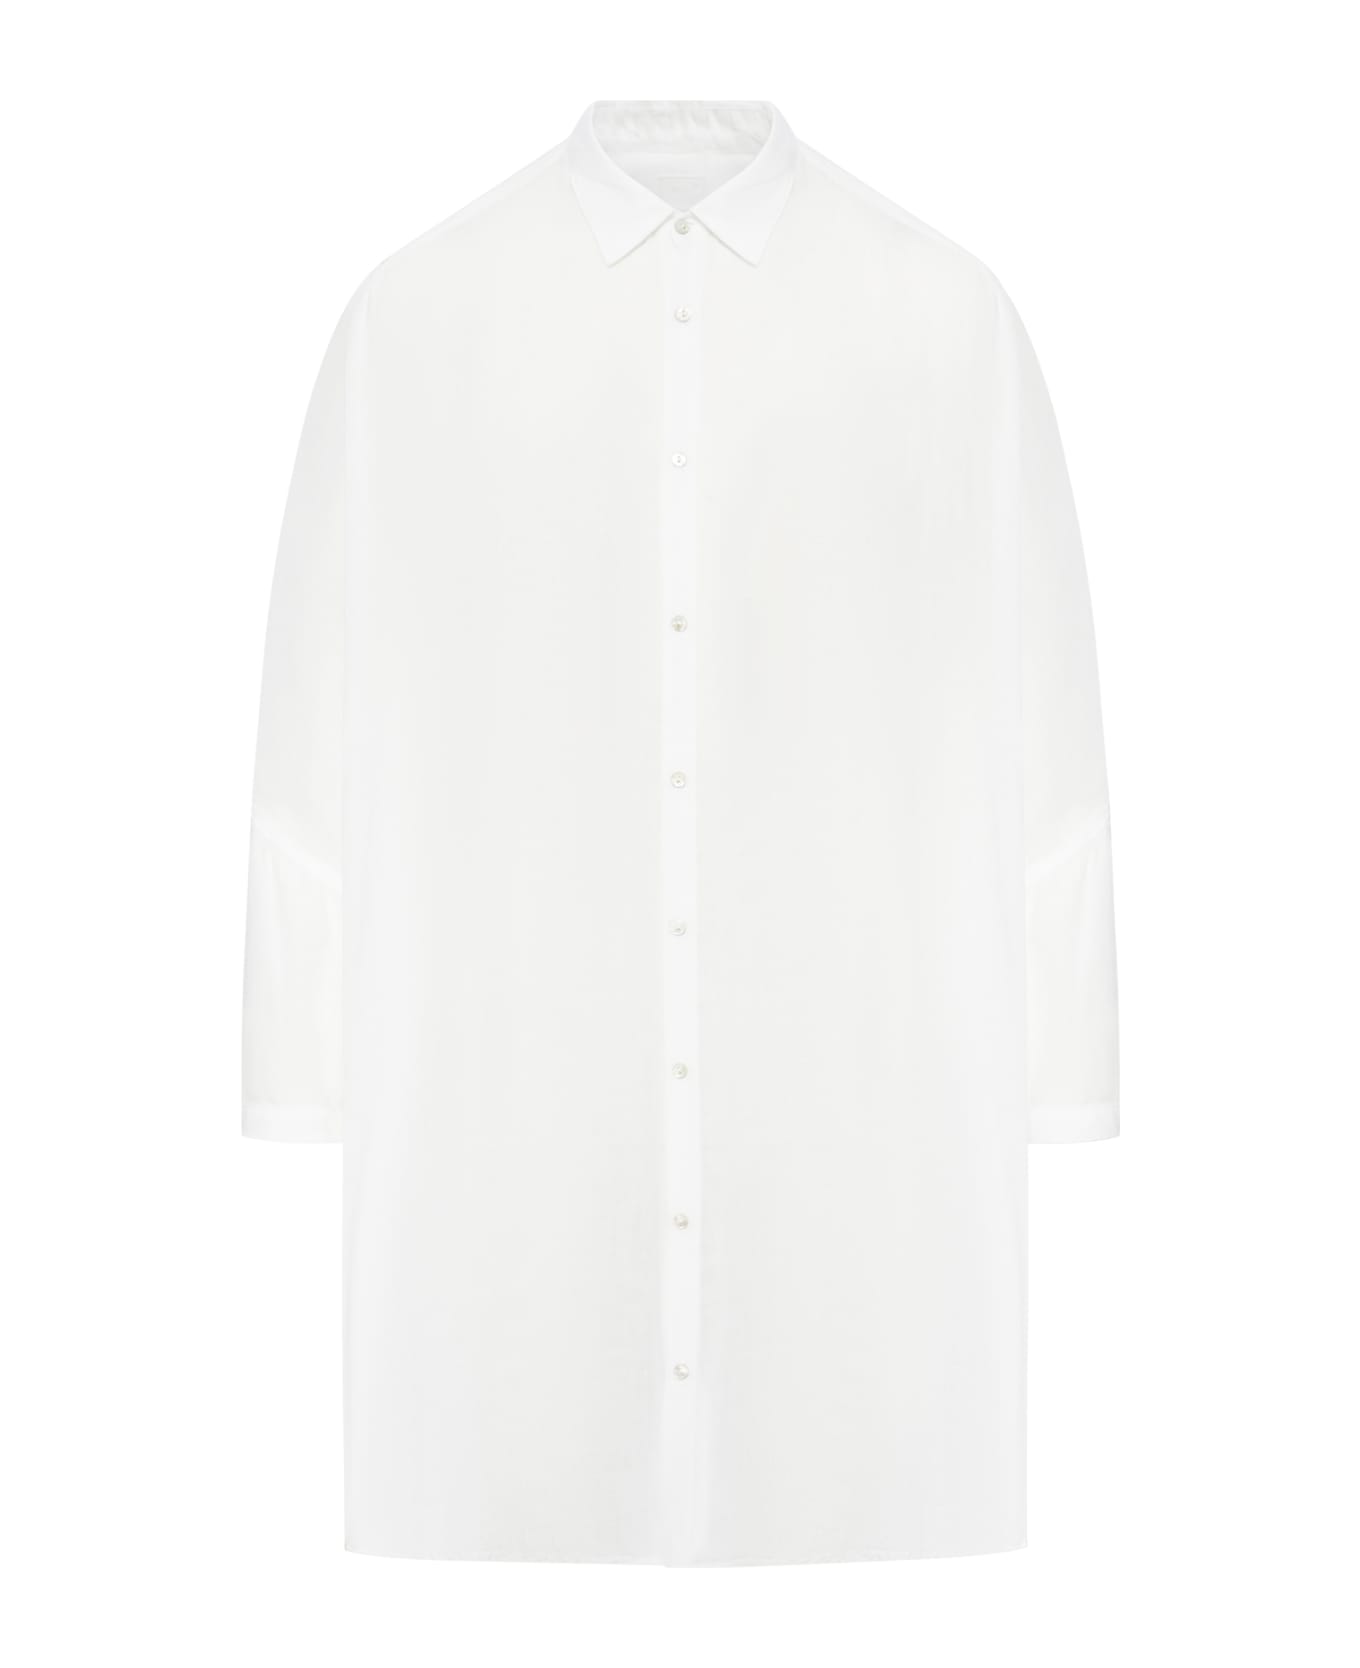 120% Lino Short Sleeve Woman Shirt - White シャツ